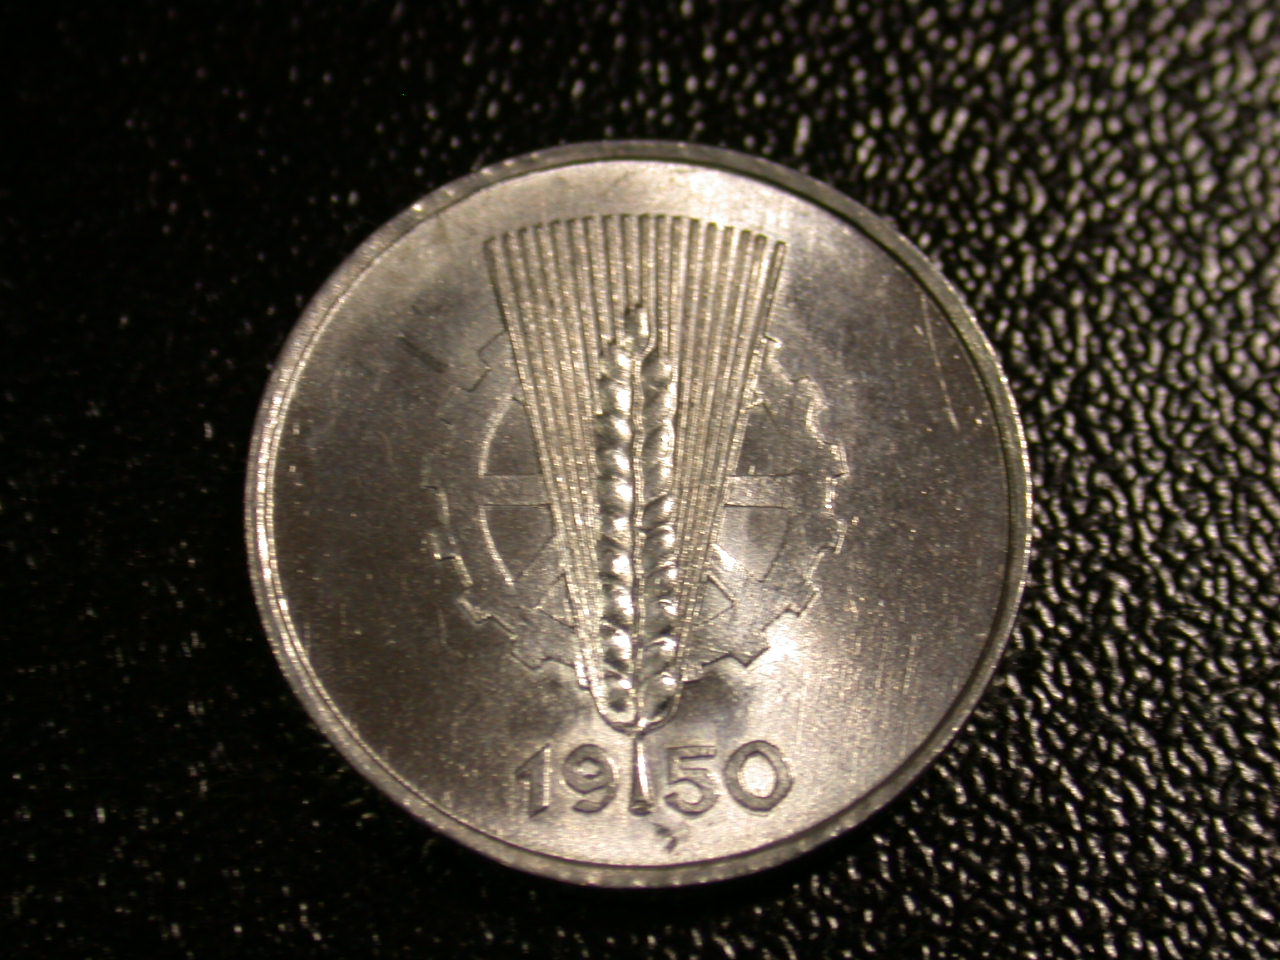  12045  DDR   1 Pfennig  1950 A  in Stempelglanz !!!   